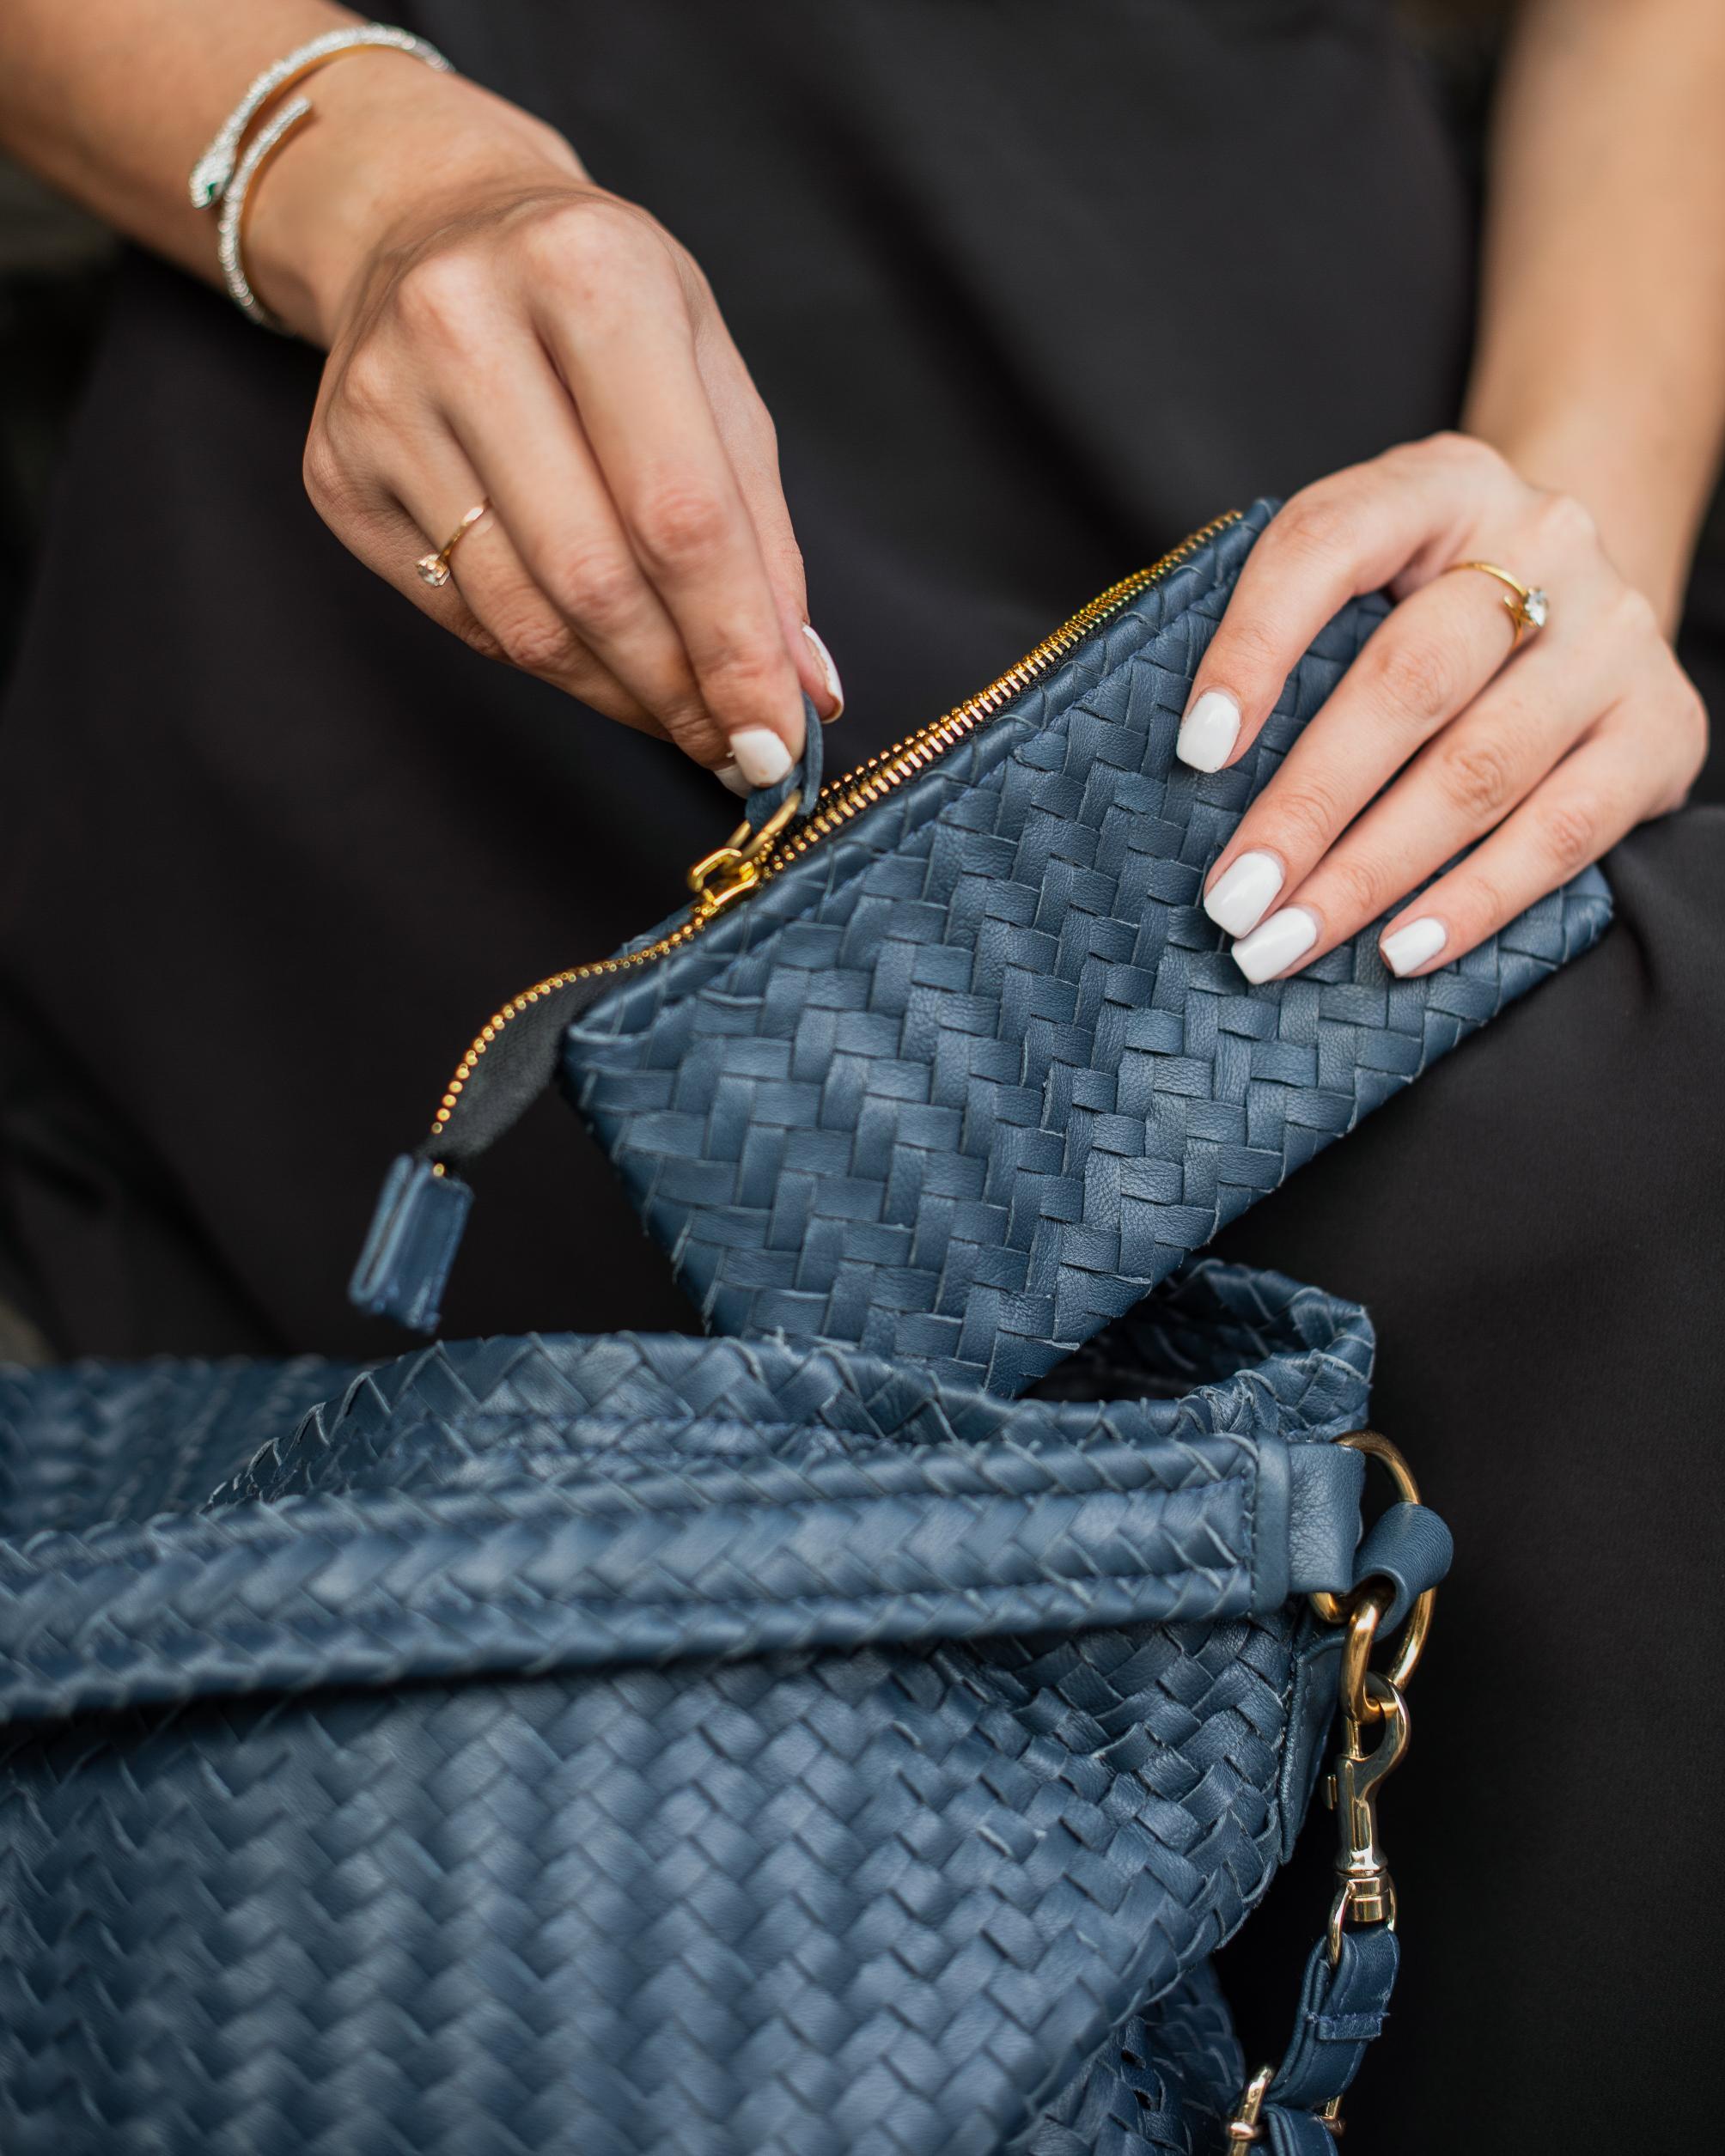 Handmade Woven Original Leather Bag-Blue